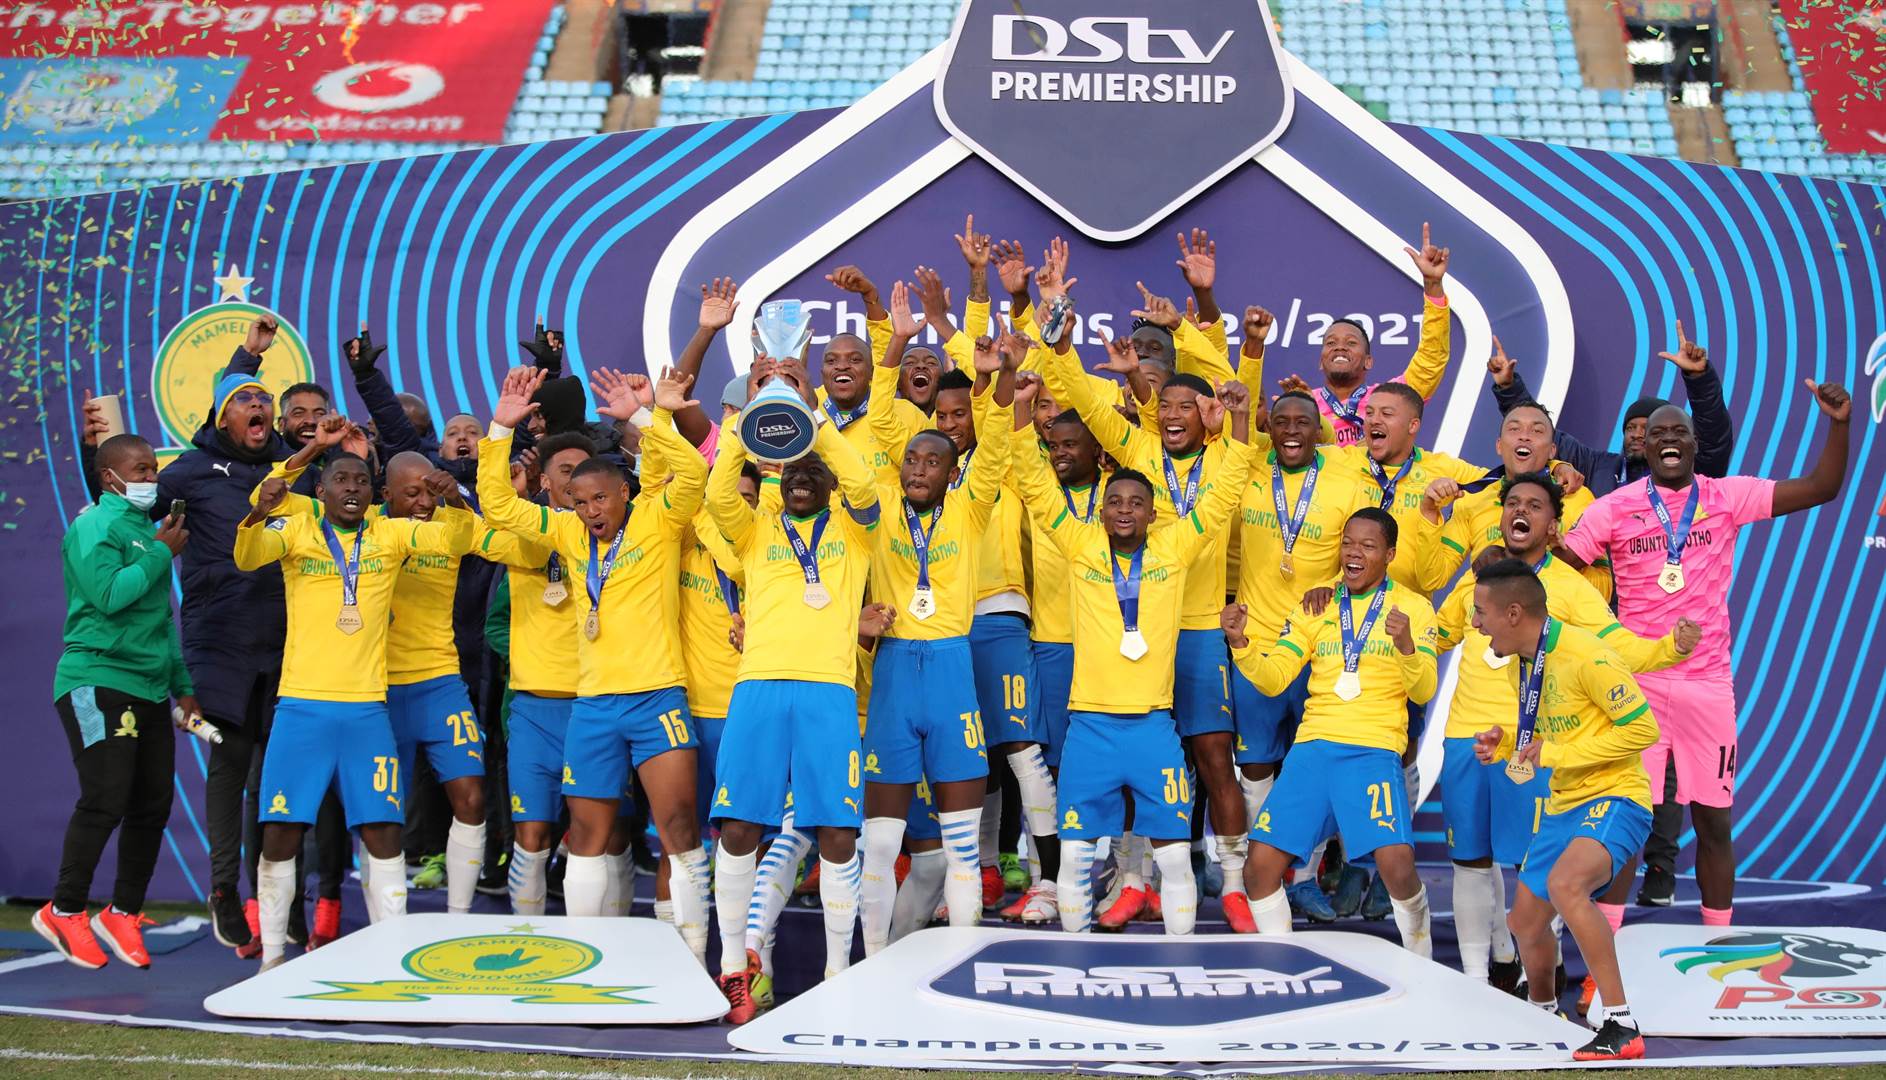 Mamelodi Sundowns' most recent trophy triumph was 